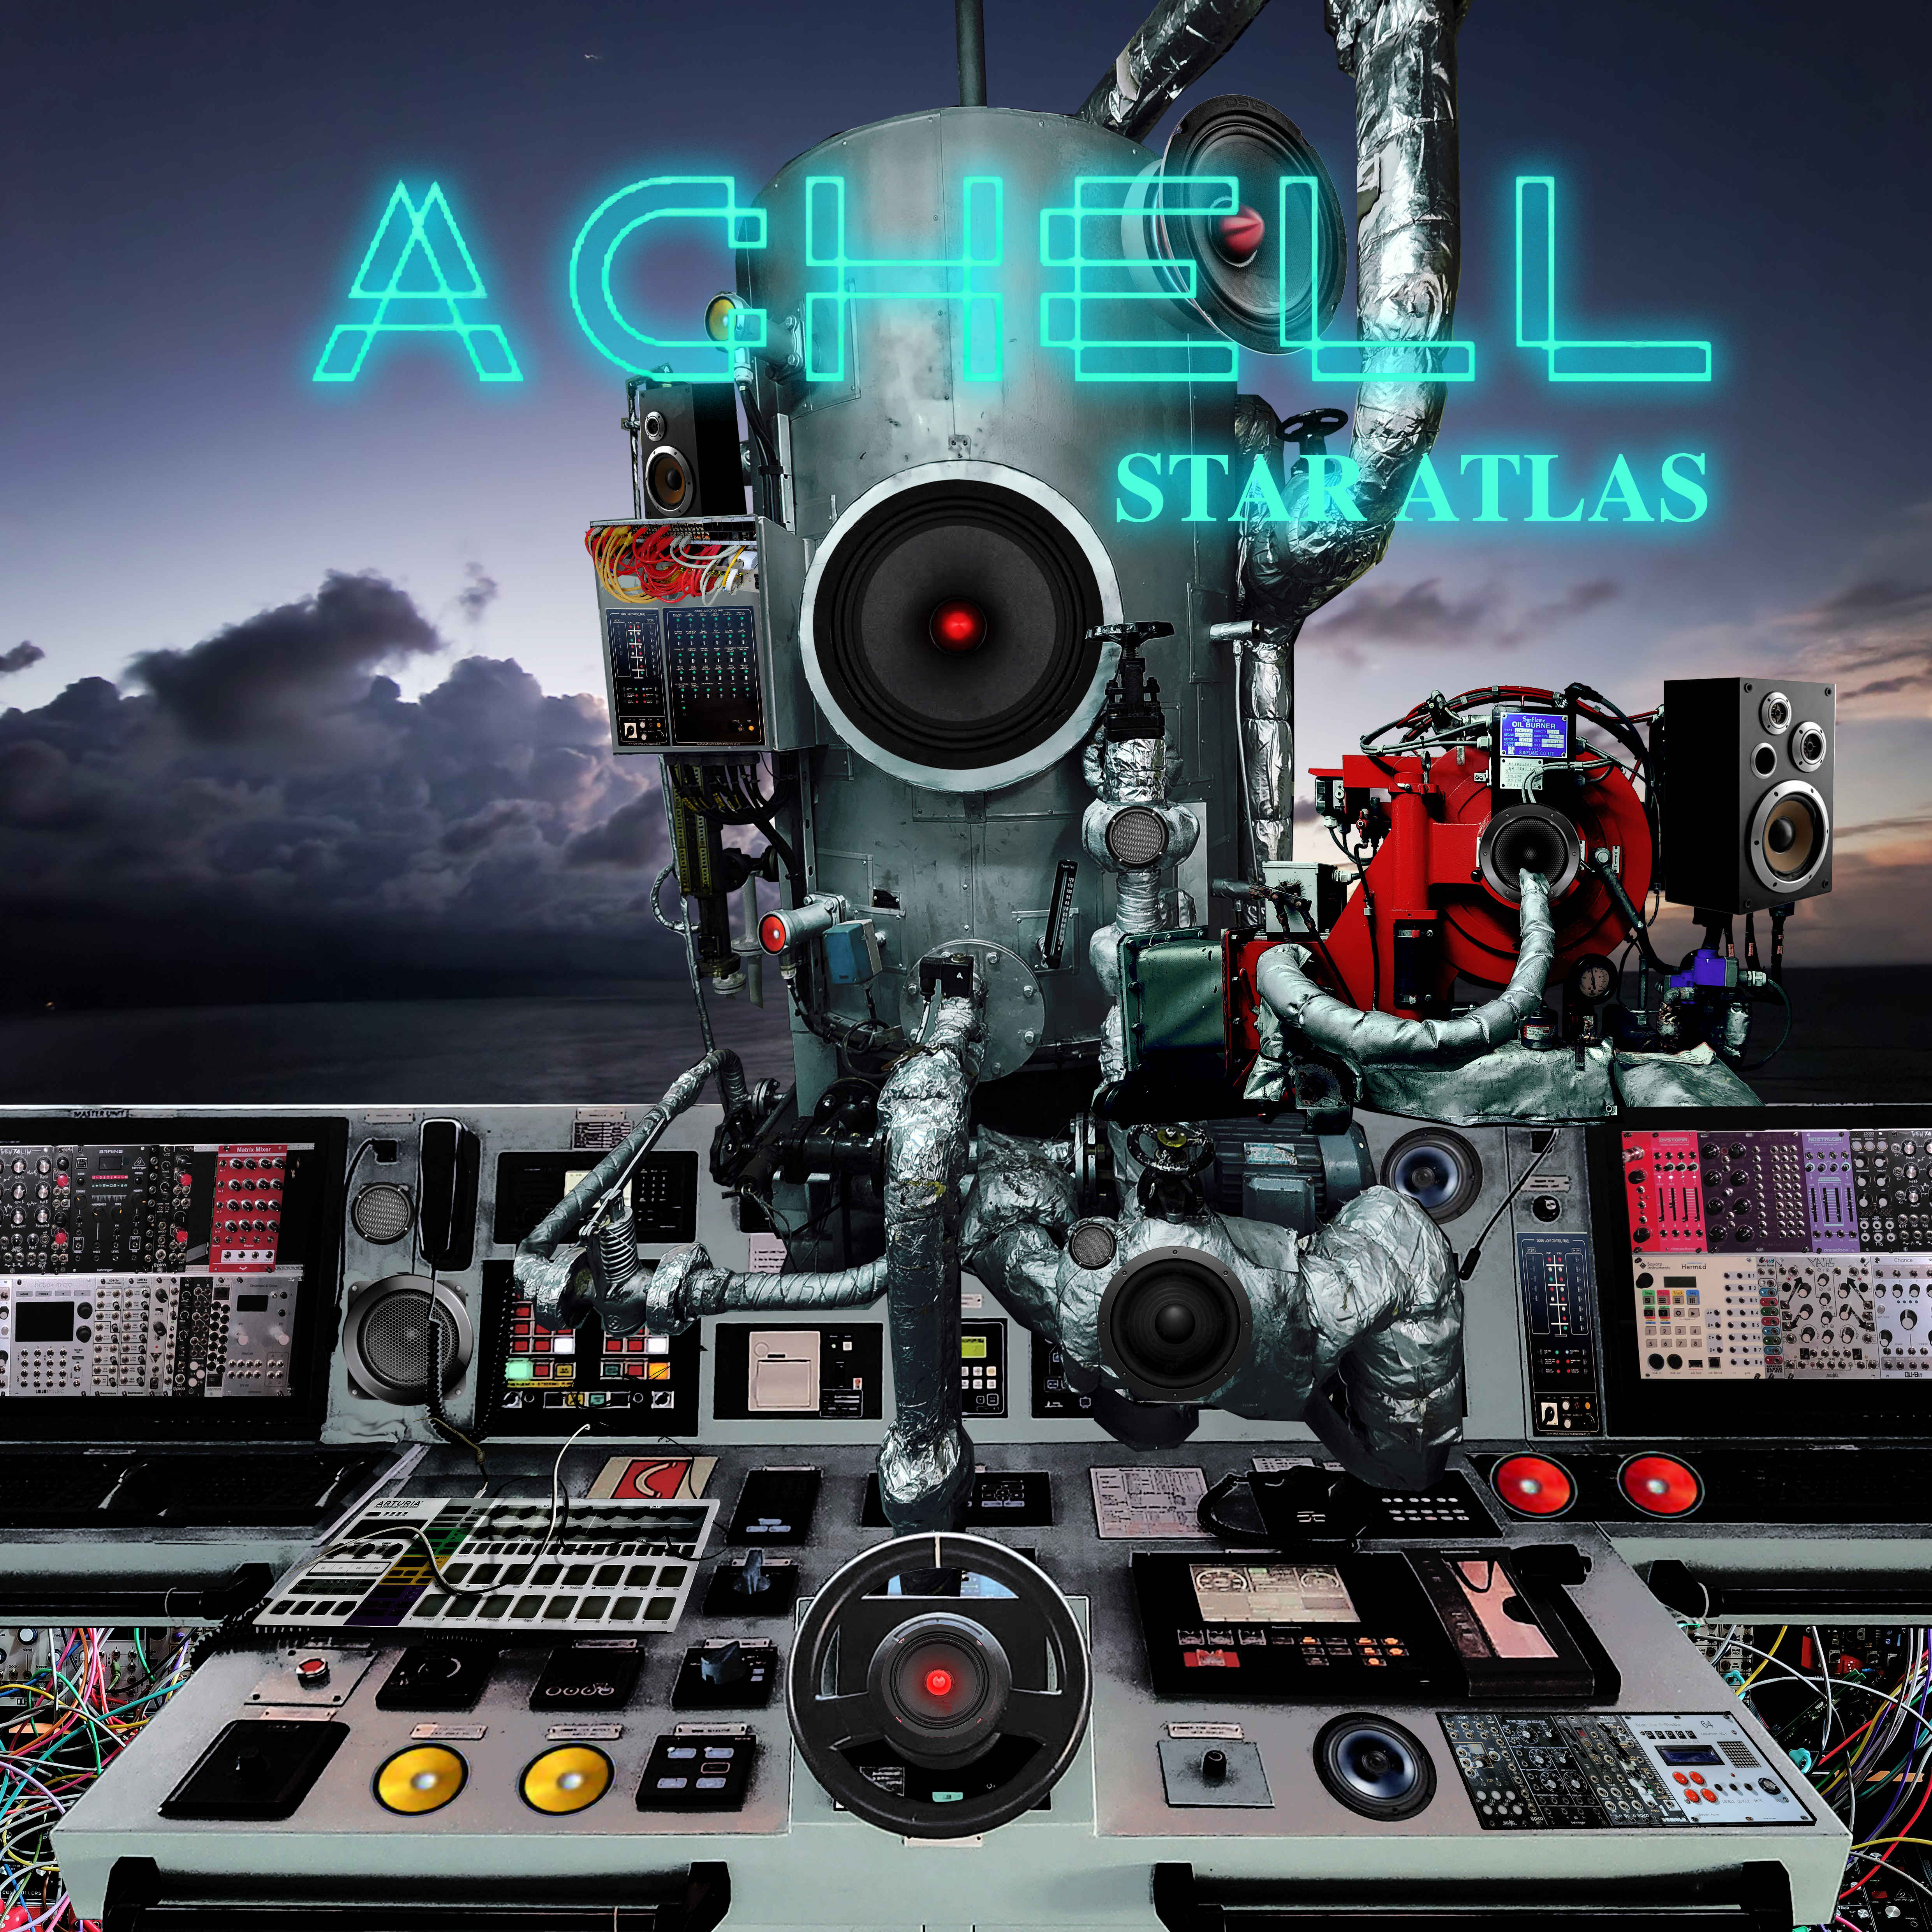 ACHELL – Star Atlas